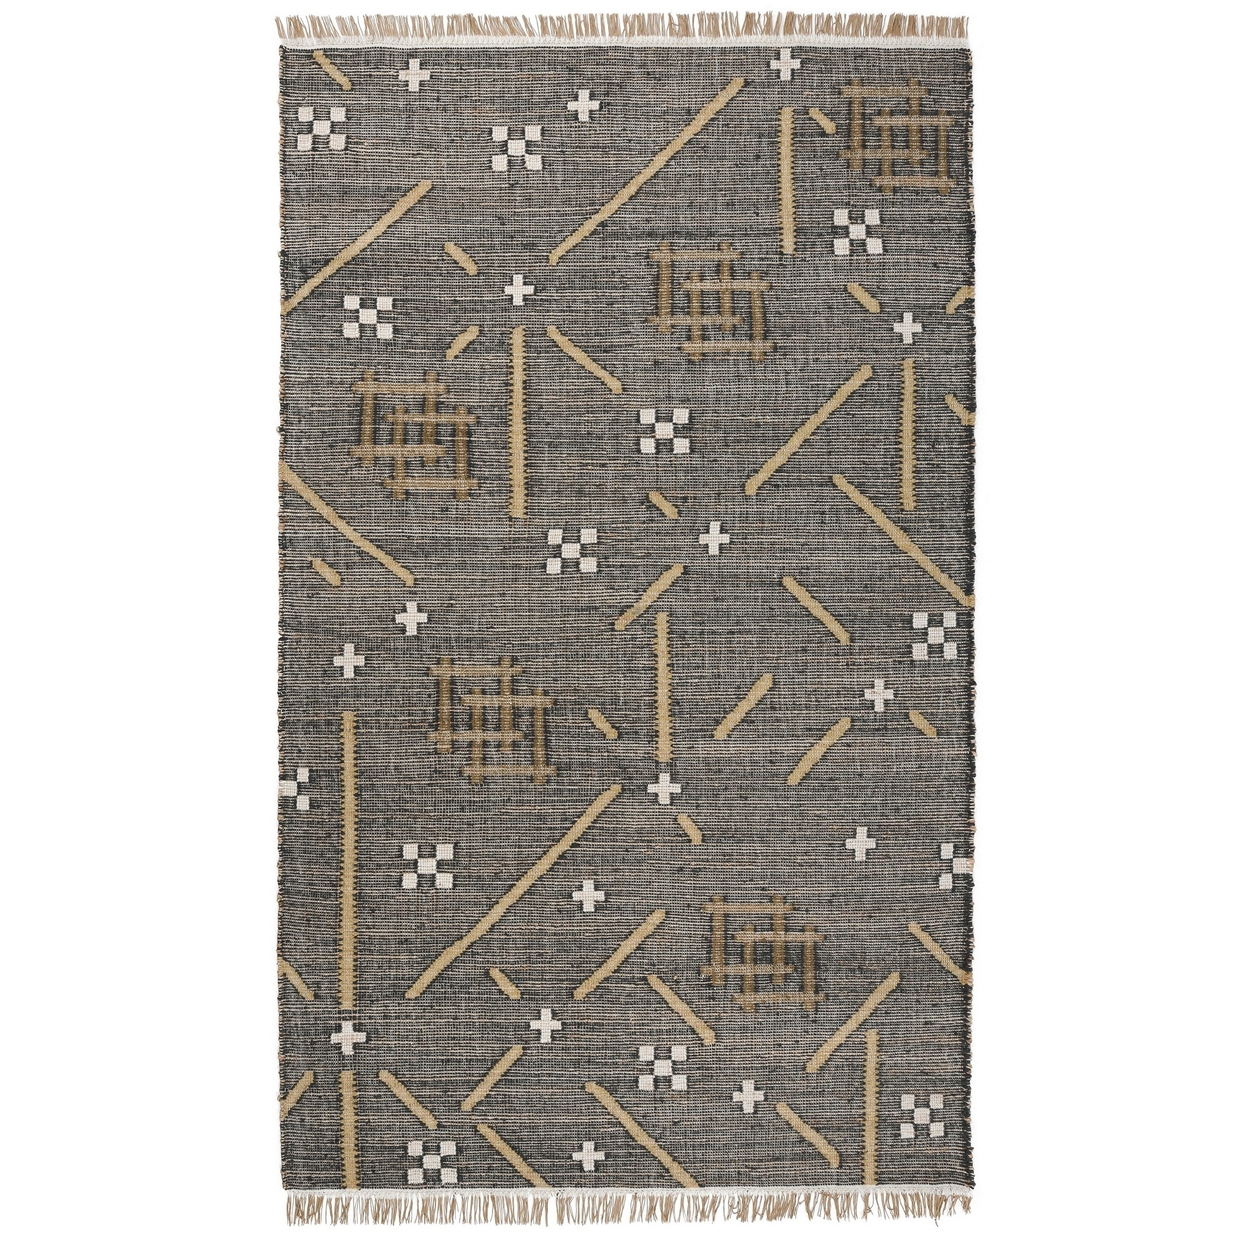 Hona 5 X 8 Medium Handwoven Area Rug, Multicolor Geometric Patterns, Black- Saltoro Sherpi